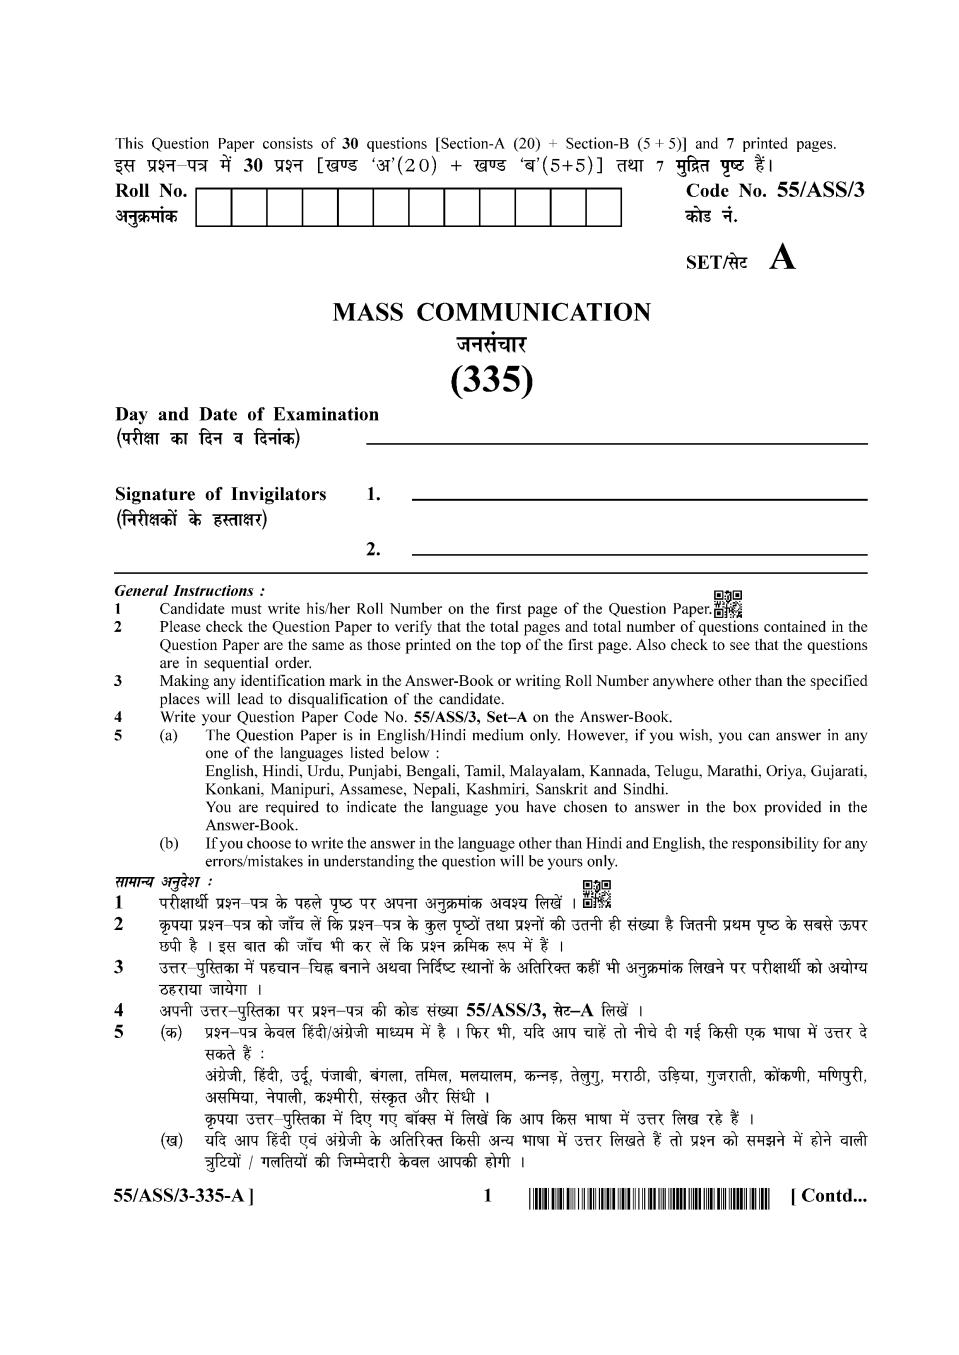 NIOS Class 12 Question Paper Oct 2017 - Mass Communication - Page 1